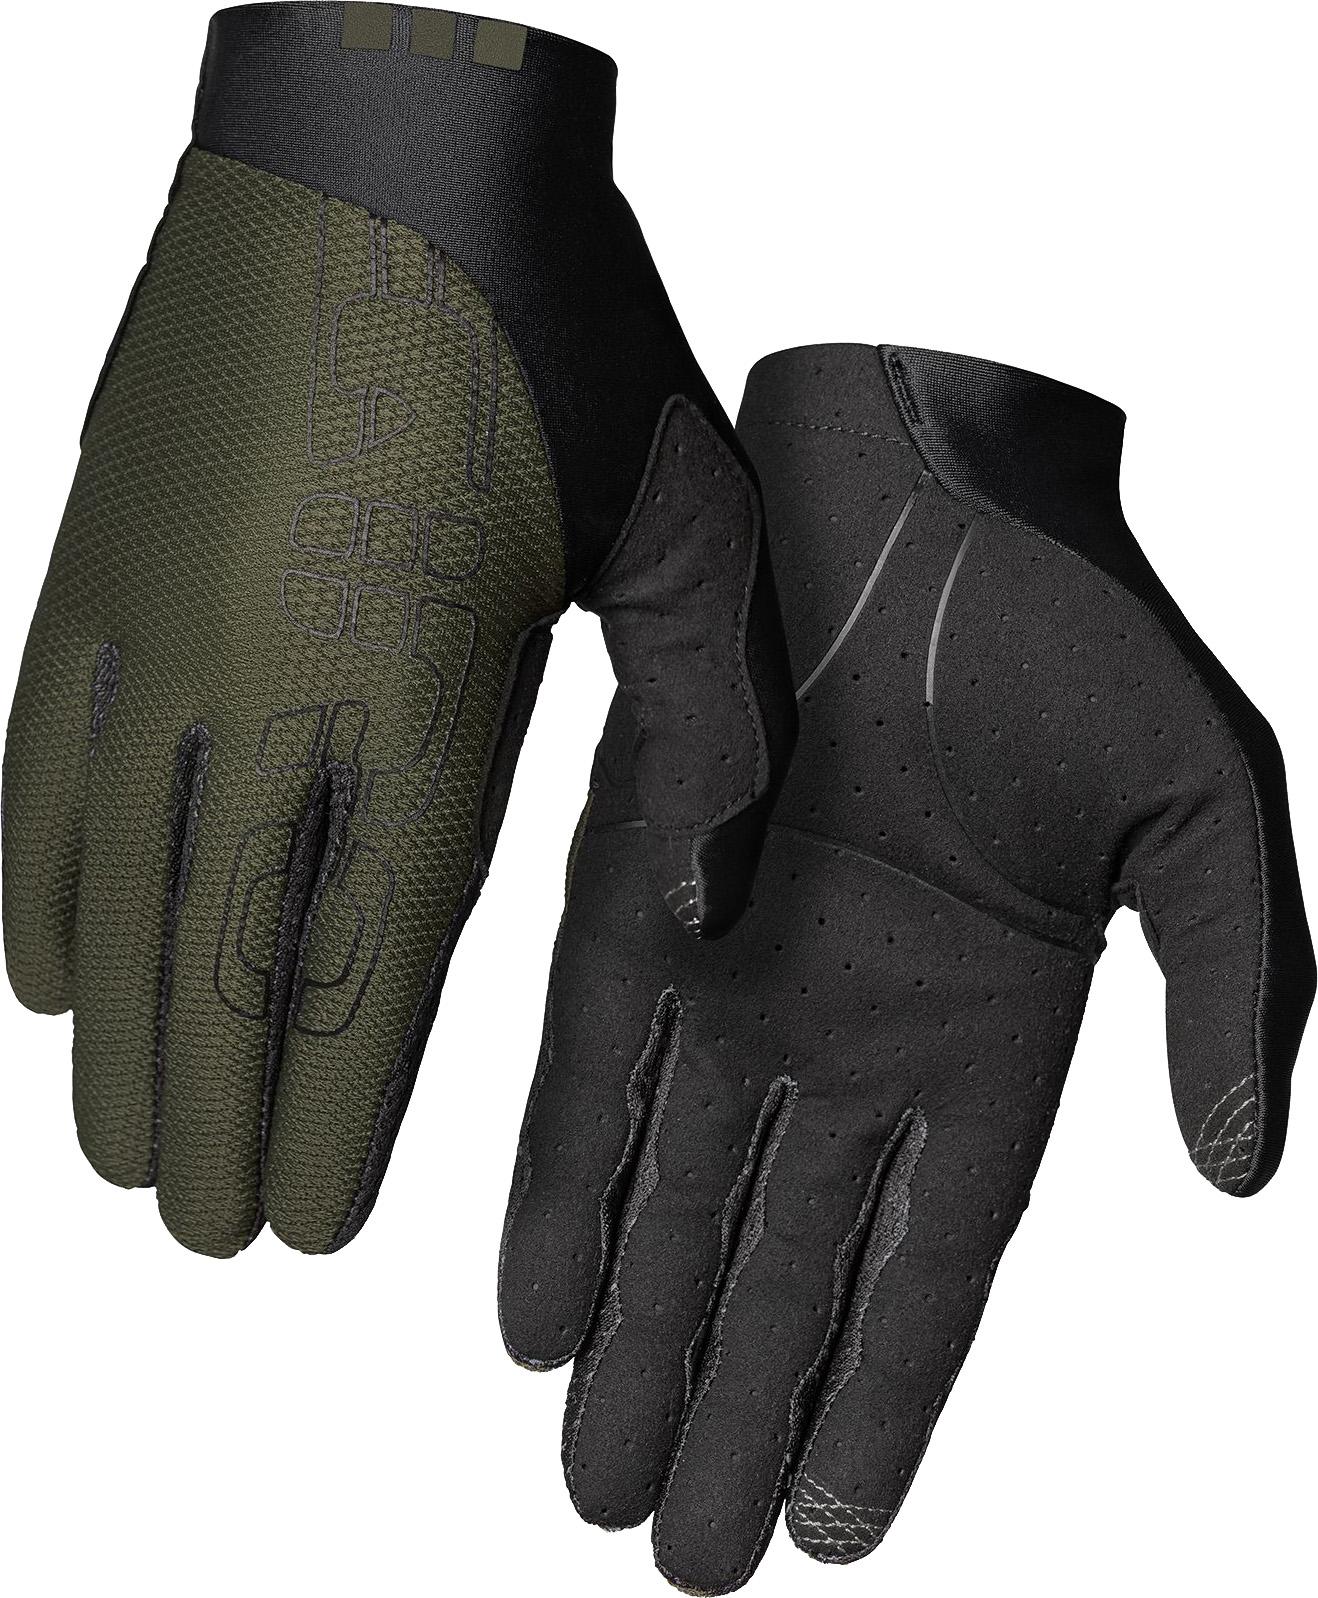 Giro Trixter Ff Gloves - Olive